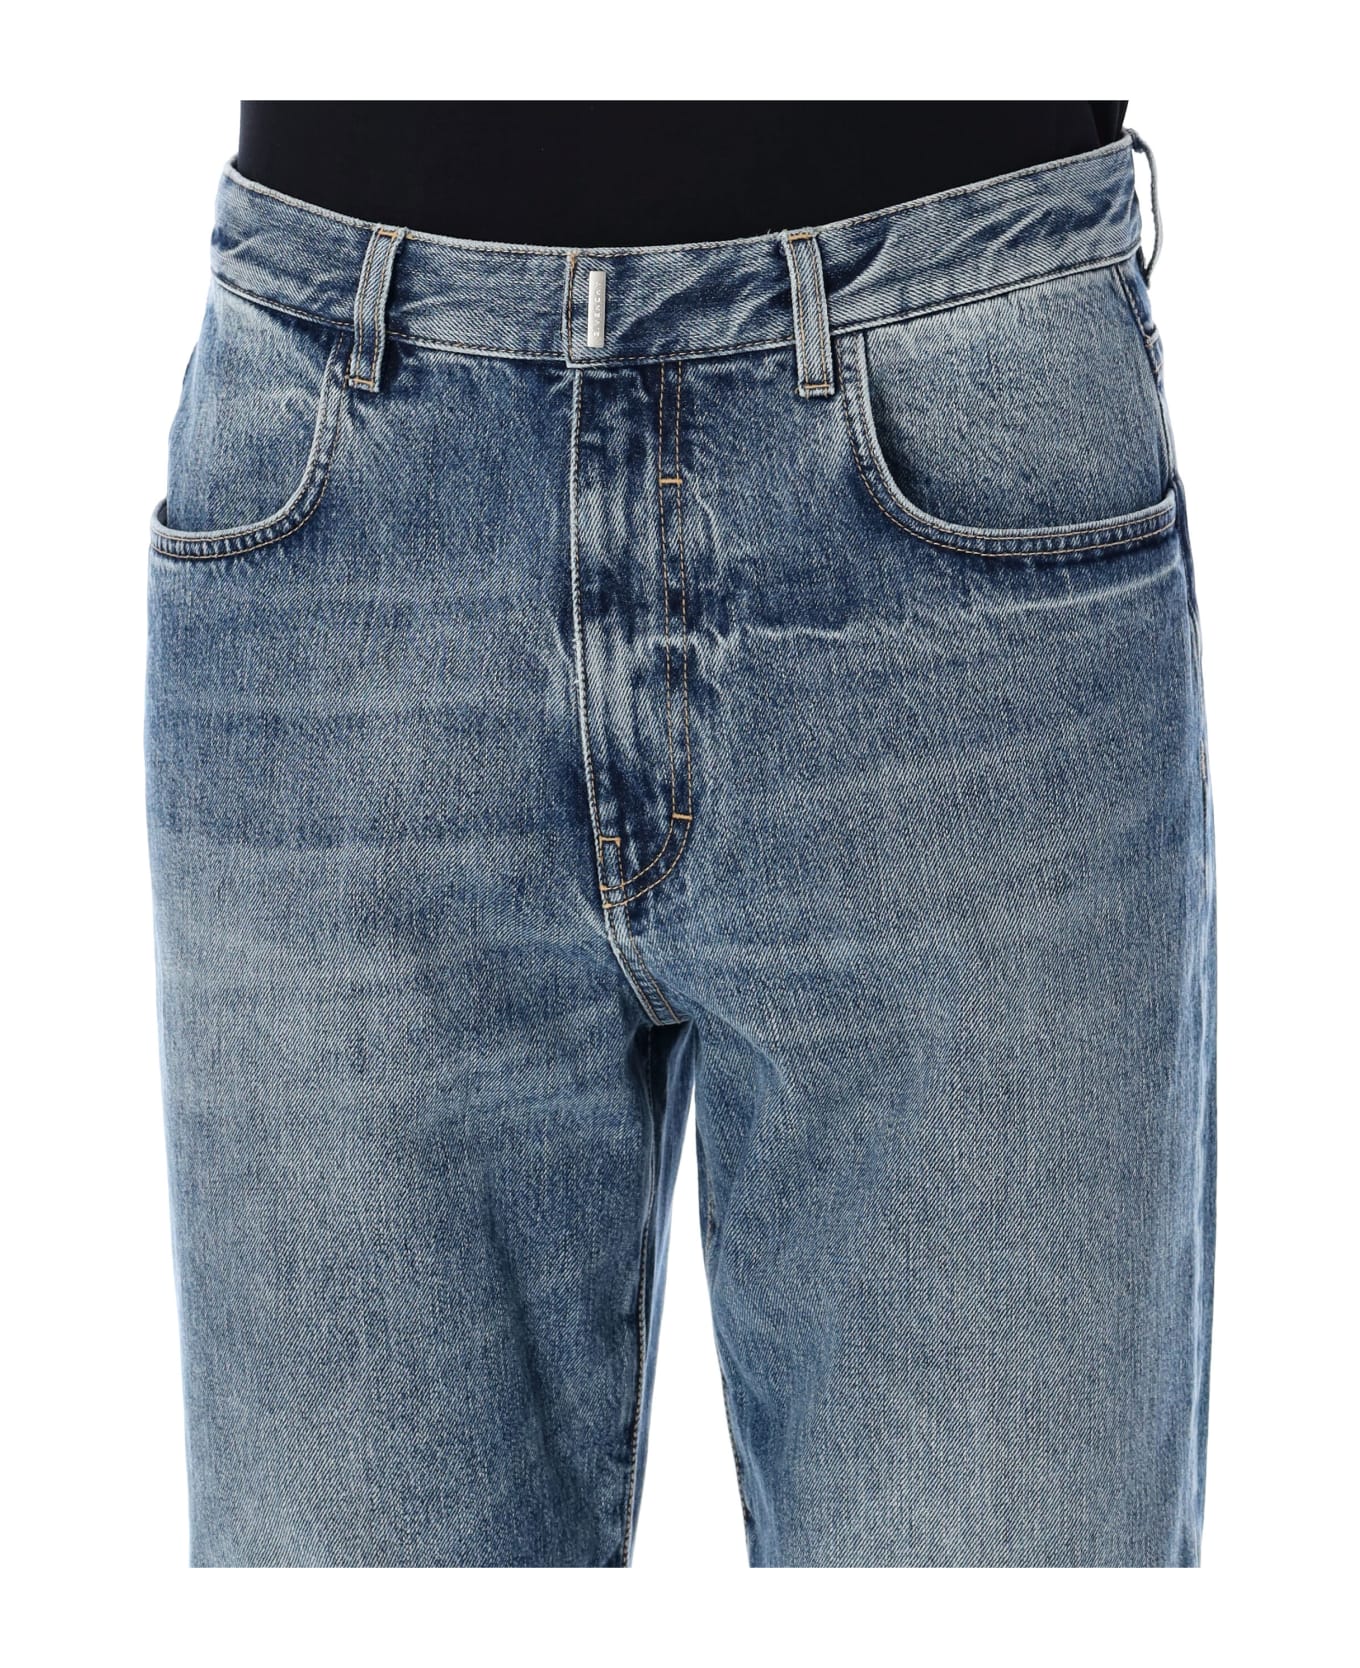 Givenchy Round Regular Fit 5 Pockets Denim - INDIGO BLUE デニム